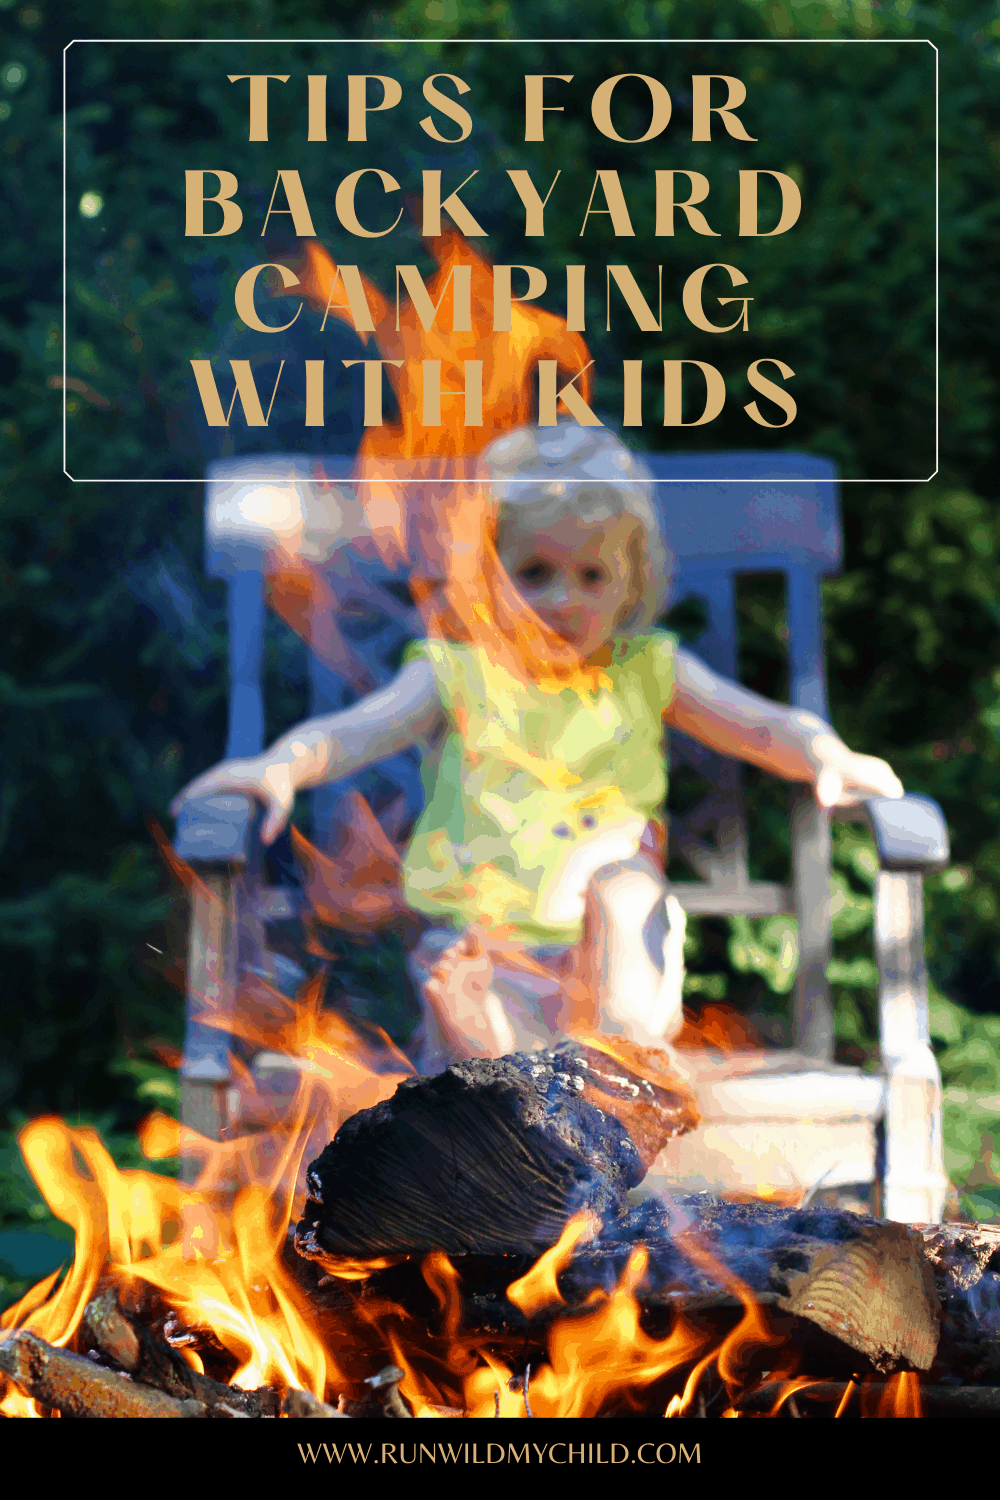 https://runwildmychild.com/wp-content/uploads/2021/06/Tips-for-backyard-camping-with-kids.png